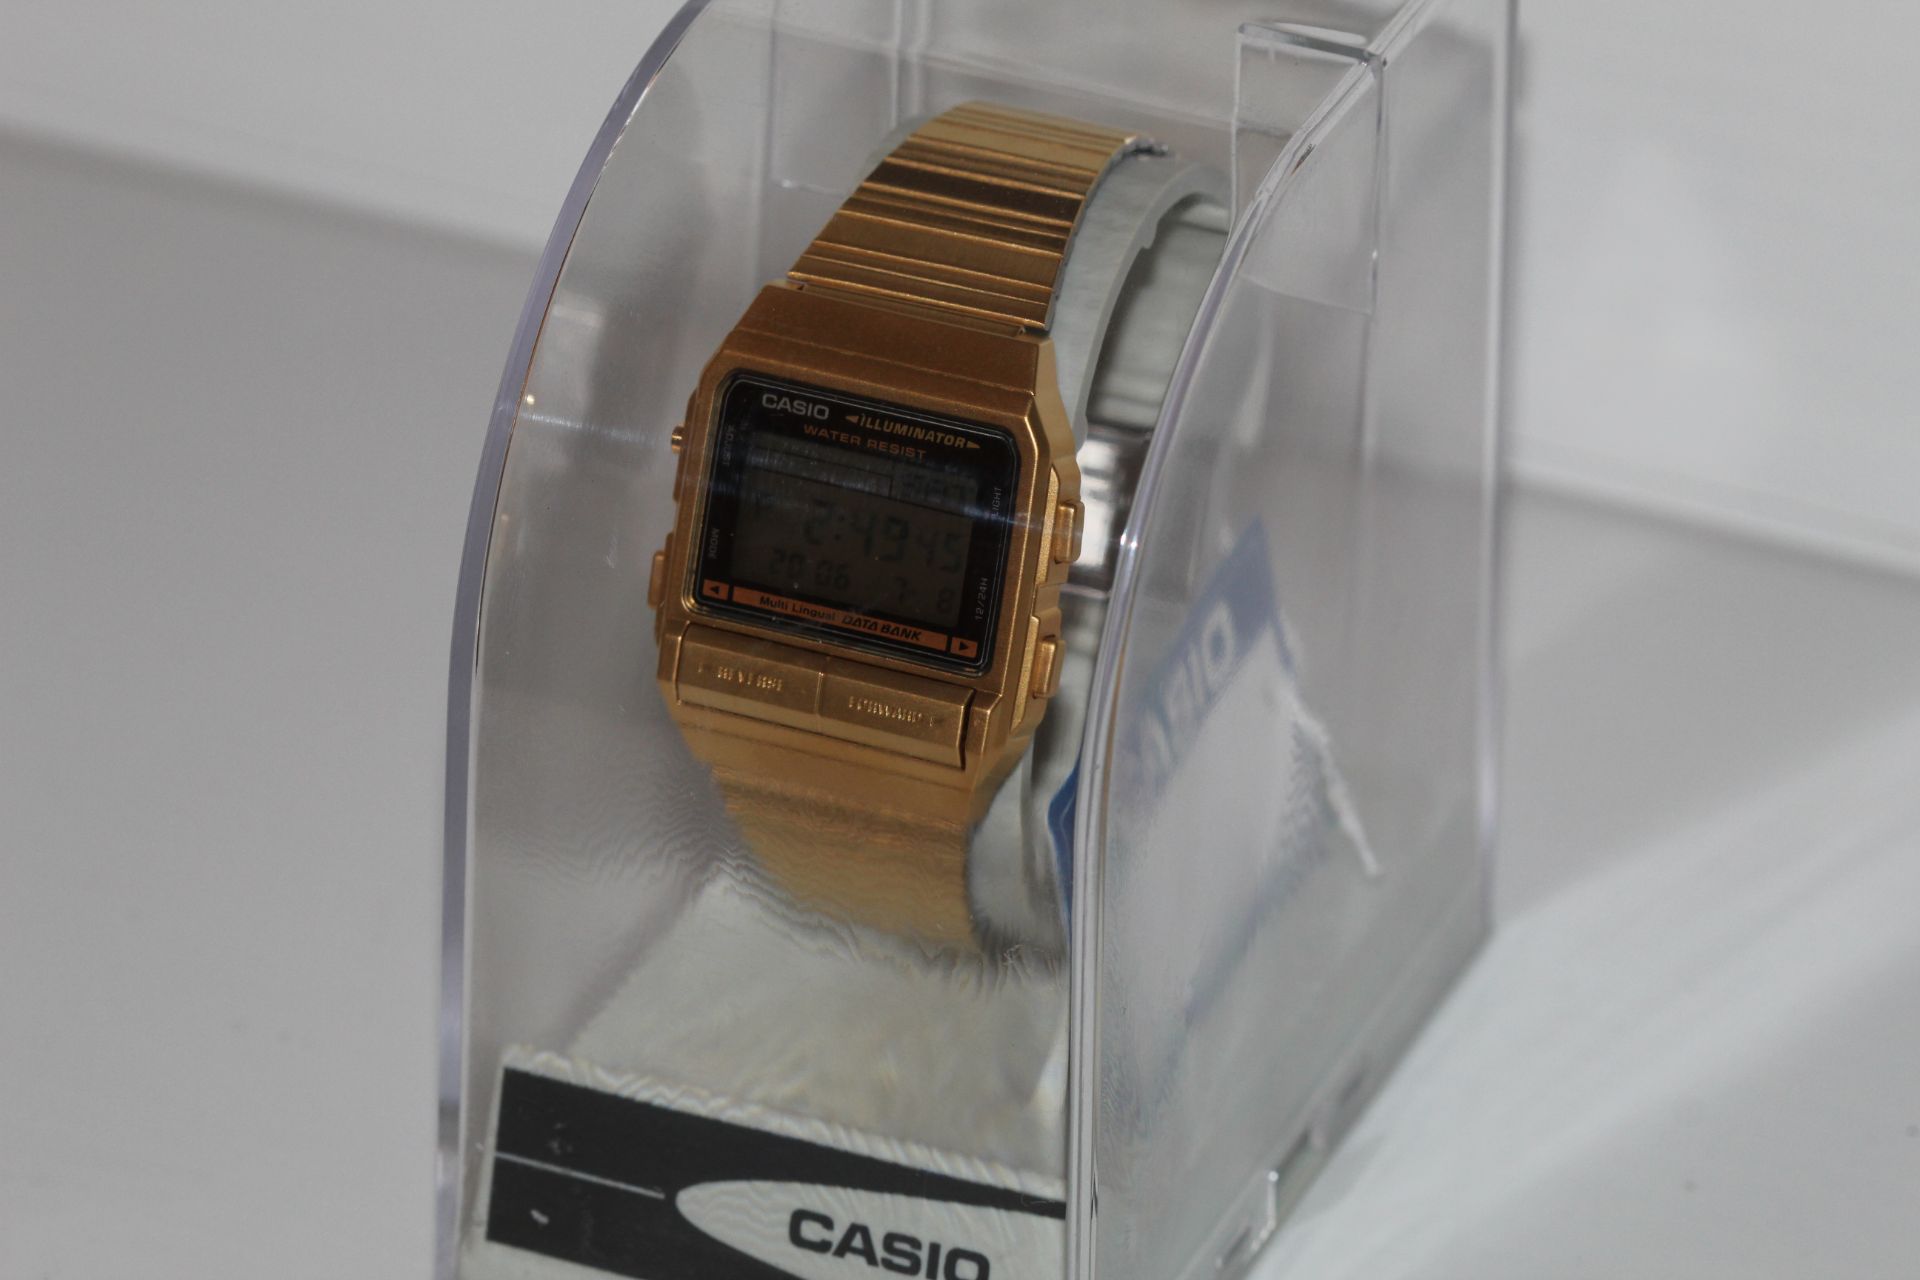 Casio multi language digital watch - Image 3 of 3